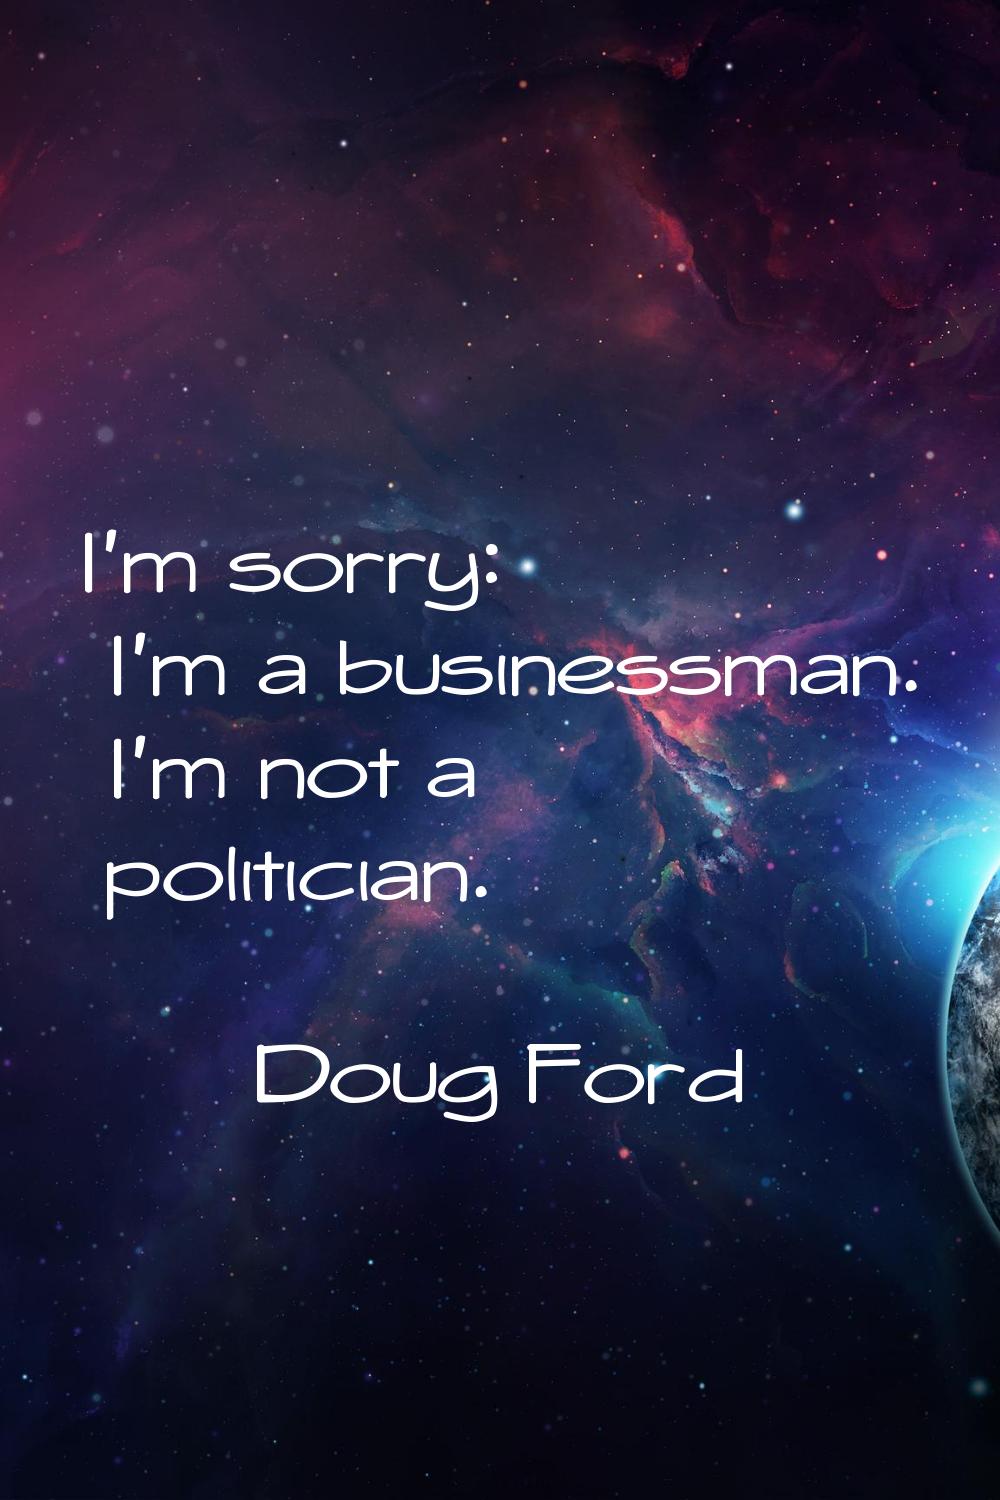 I'm sorry: I'm a businessman. I'm not a politician.